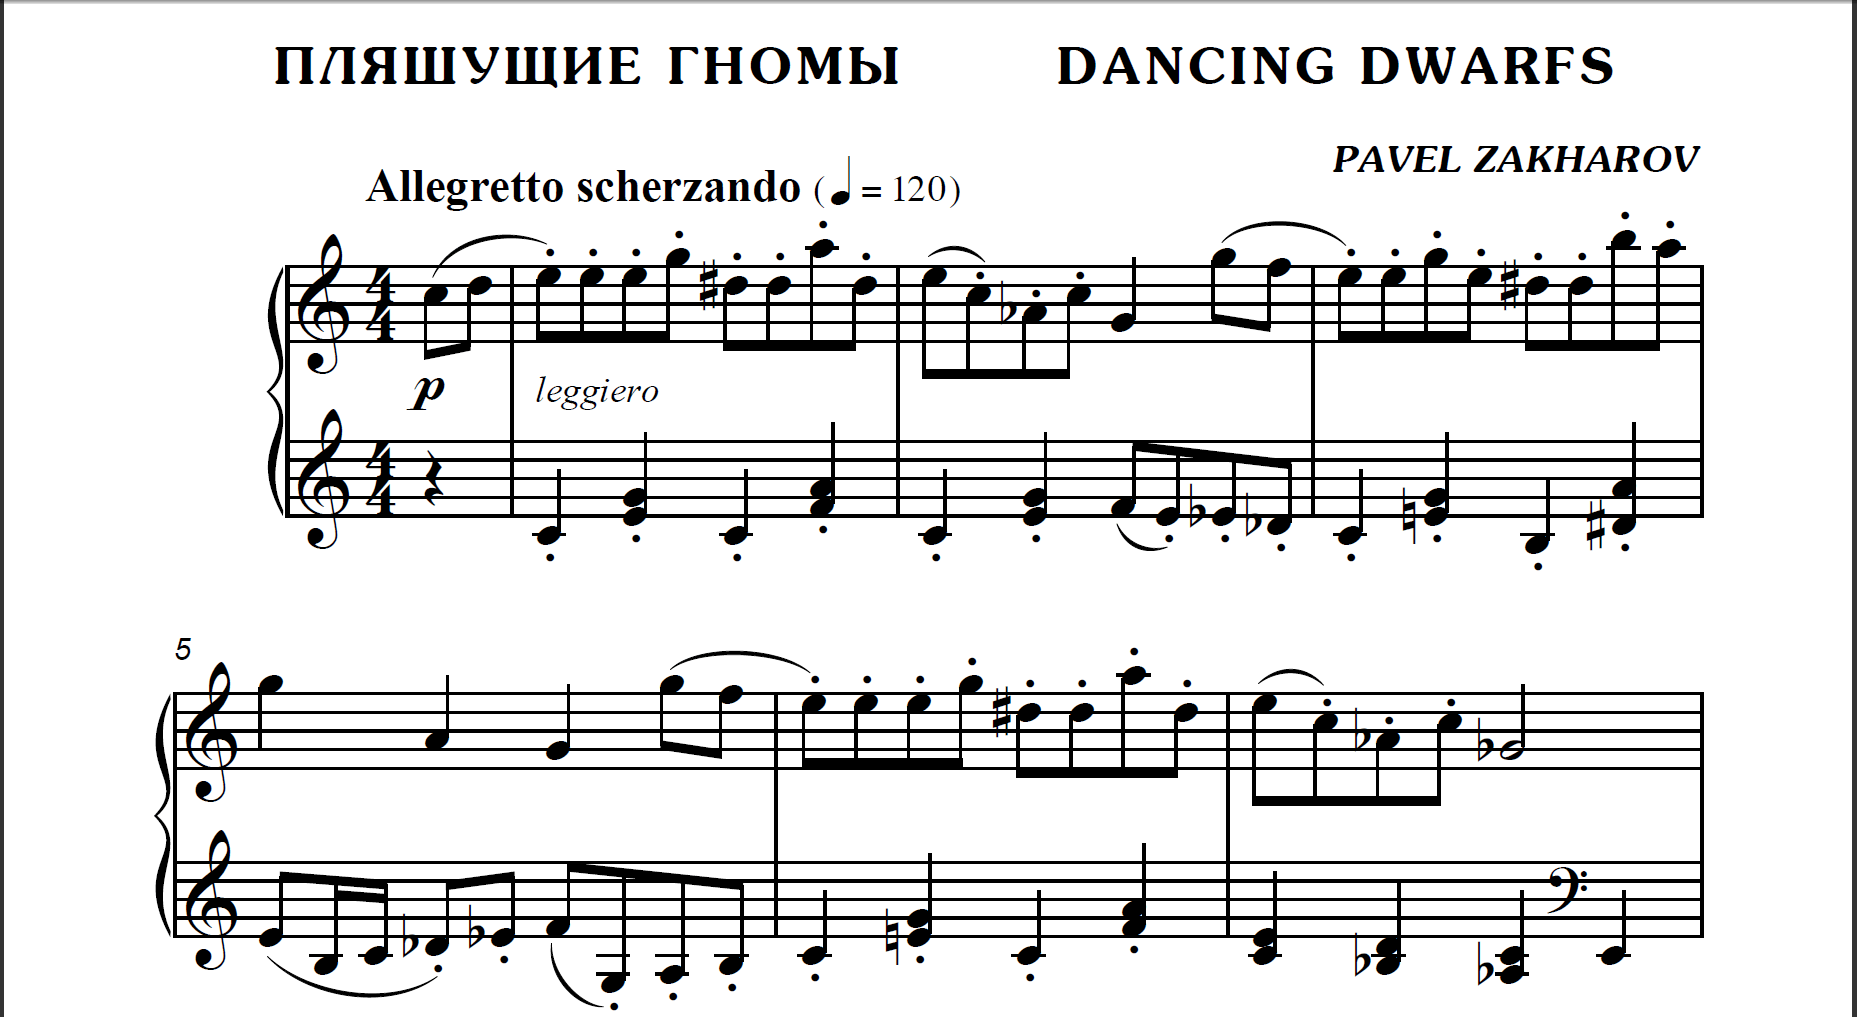 1s02 Dancing Dwarves, PAVEL ZAKHAROV / piano